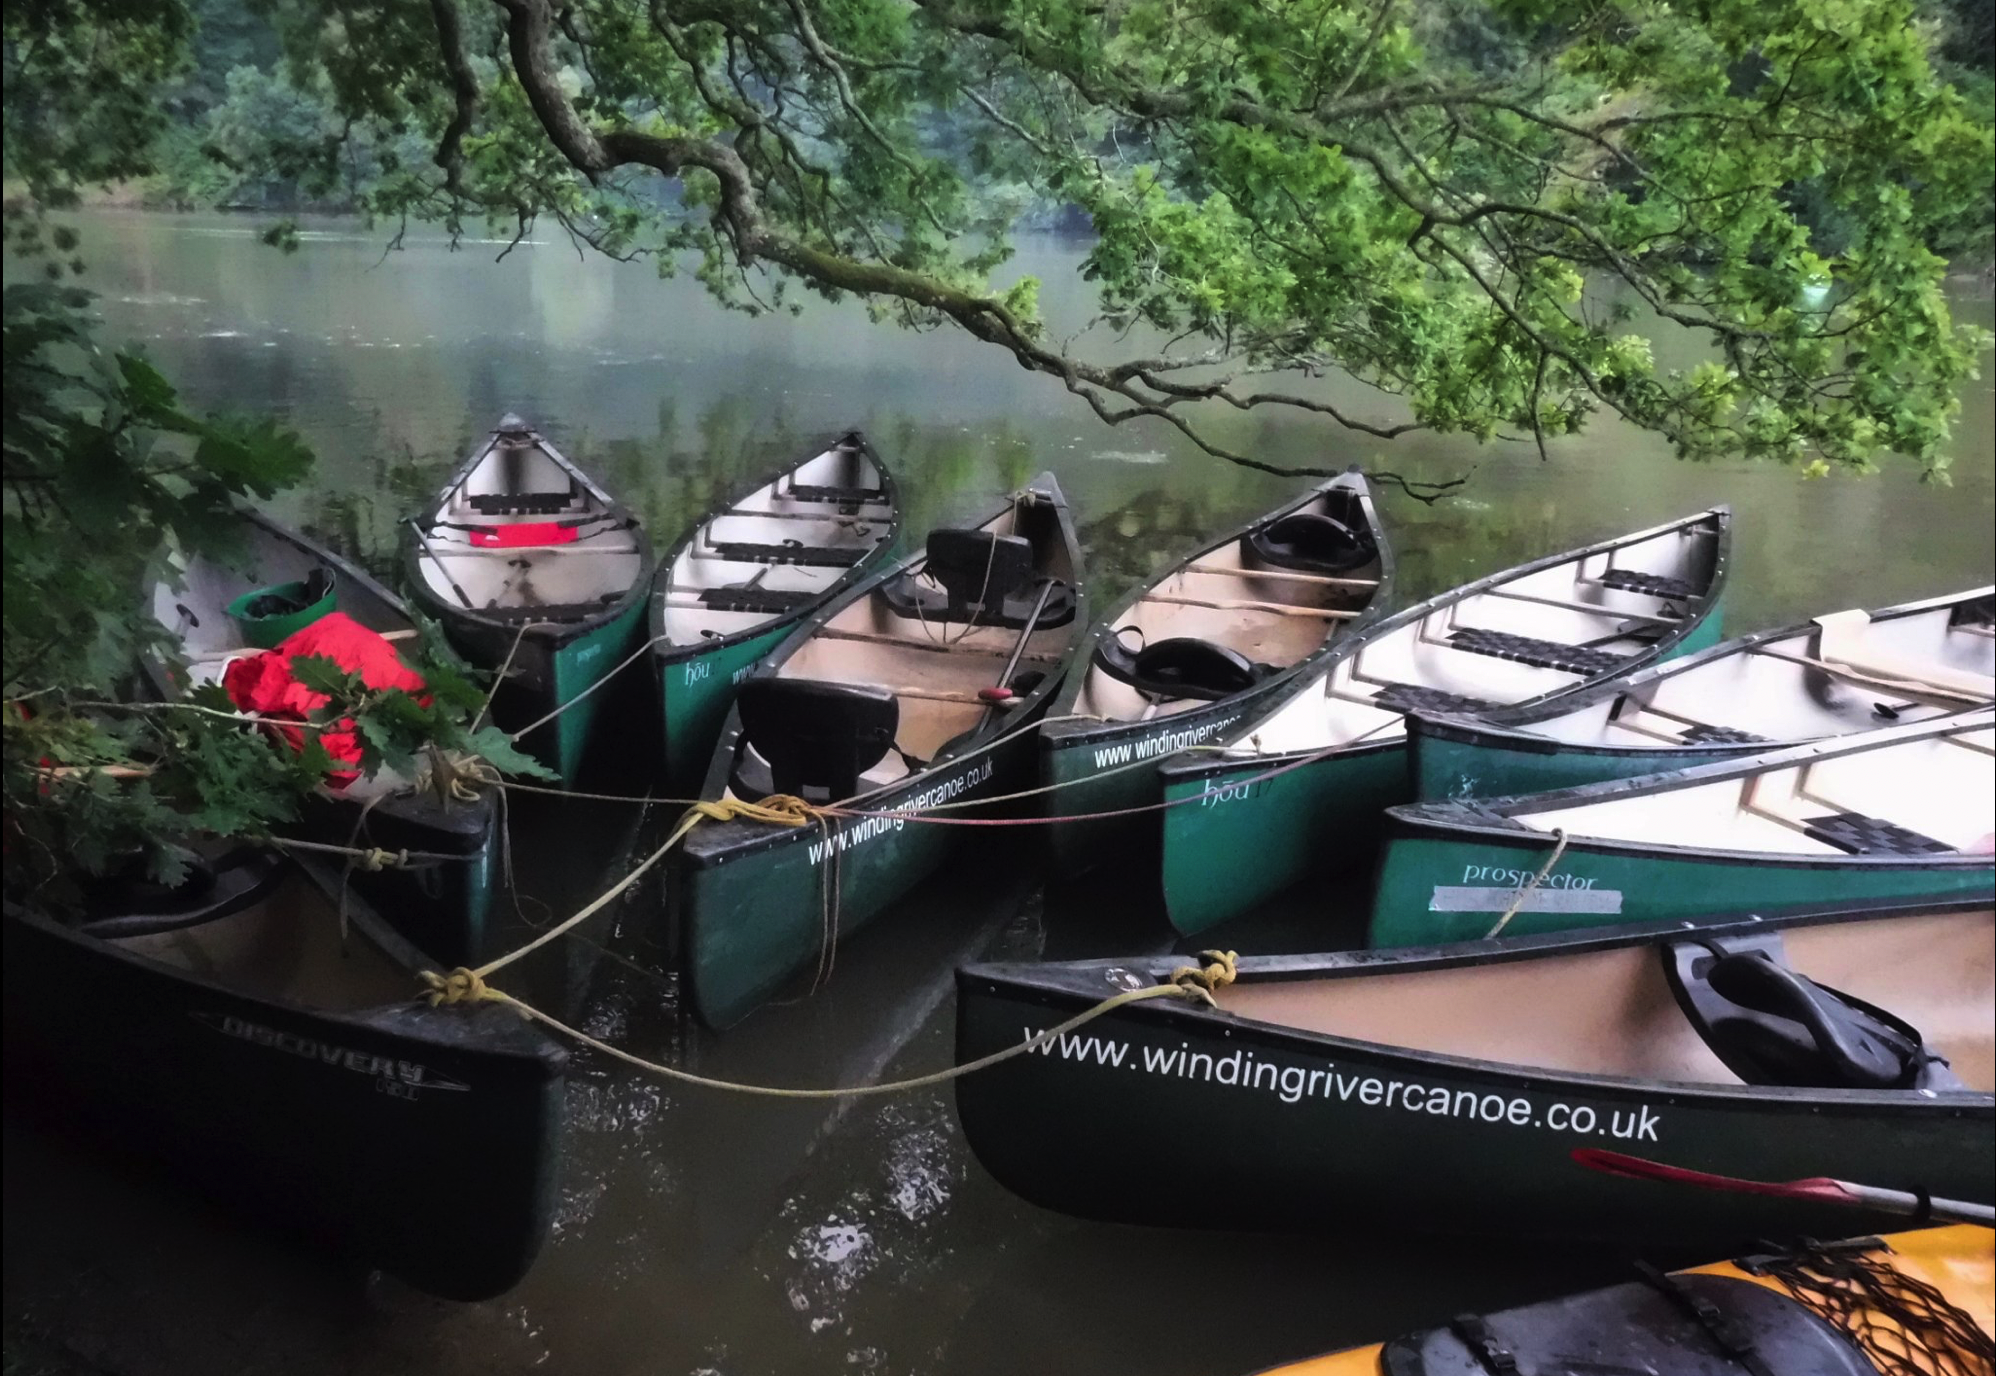 Winding river canoe